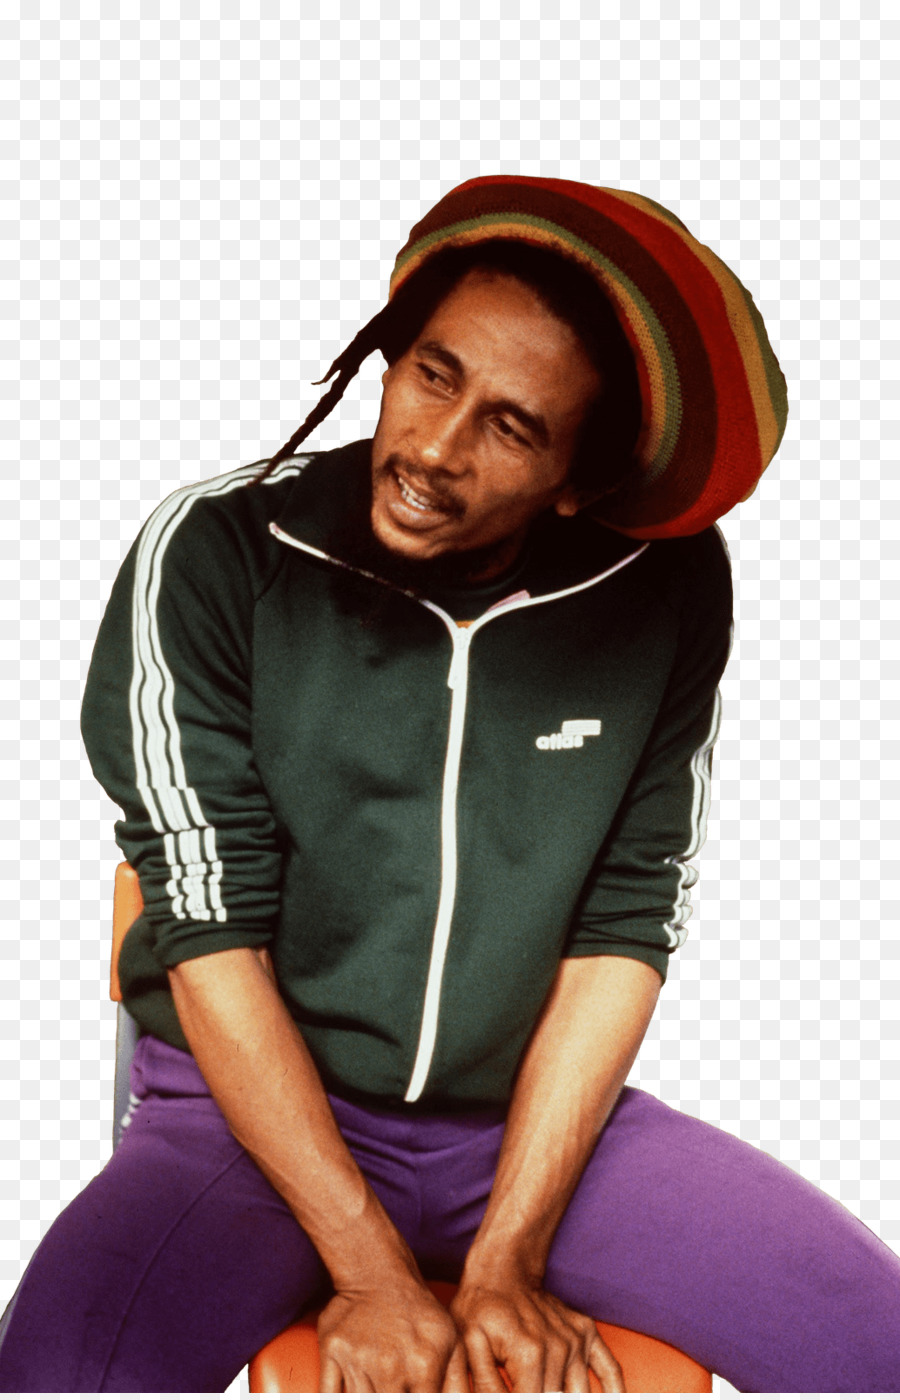 Bob Marley Museum - bob marley png download - 1034*1600 - Free Transparent  png Download.